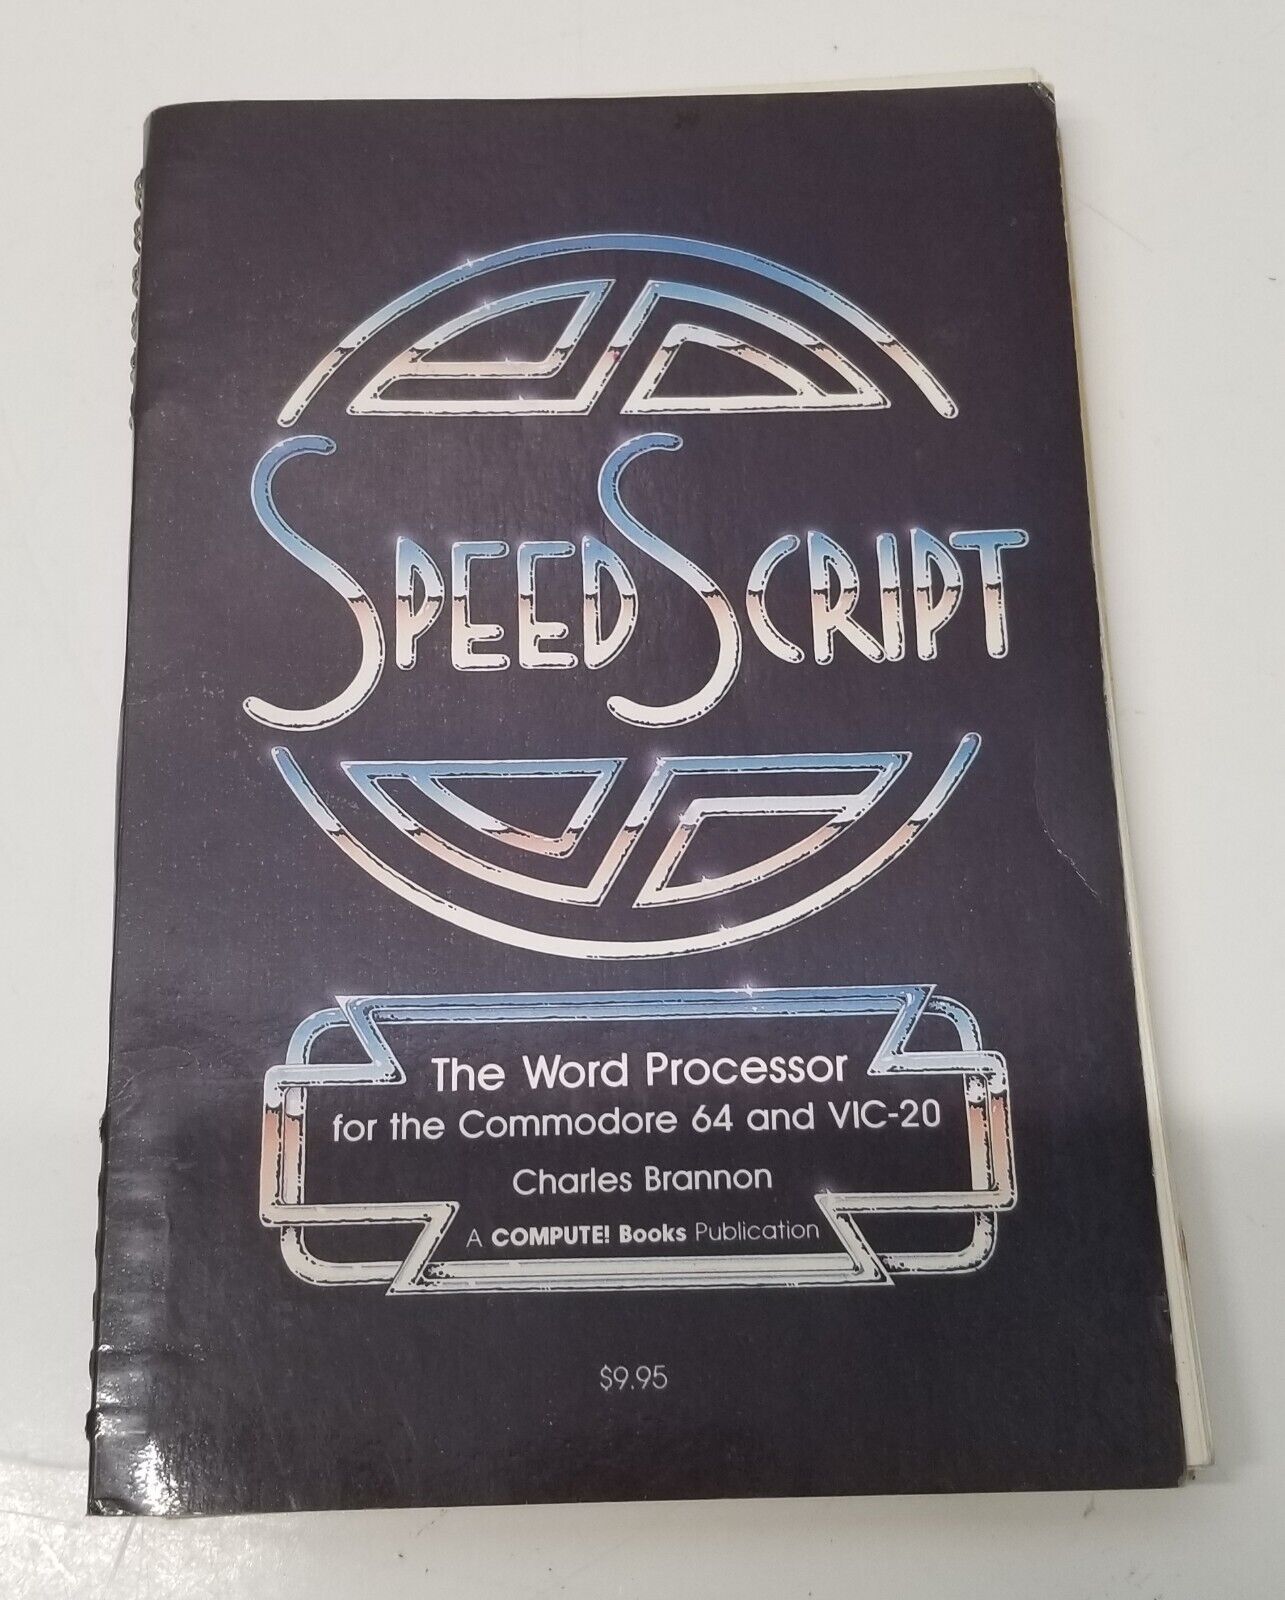 Vintage Speed Script The Word Processor for Commodore 64 Spiral 1985 Brannon